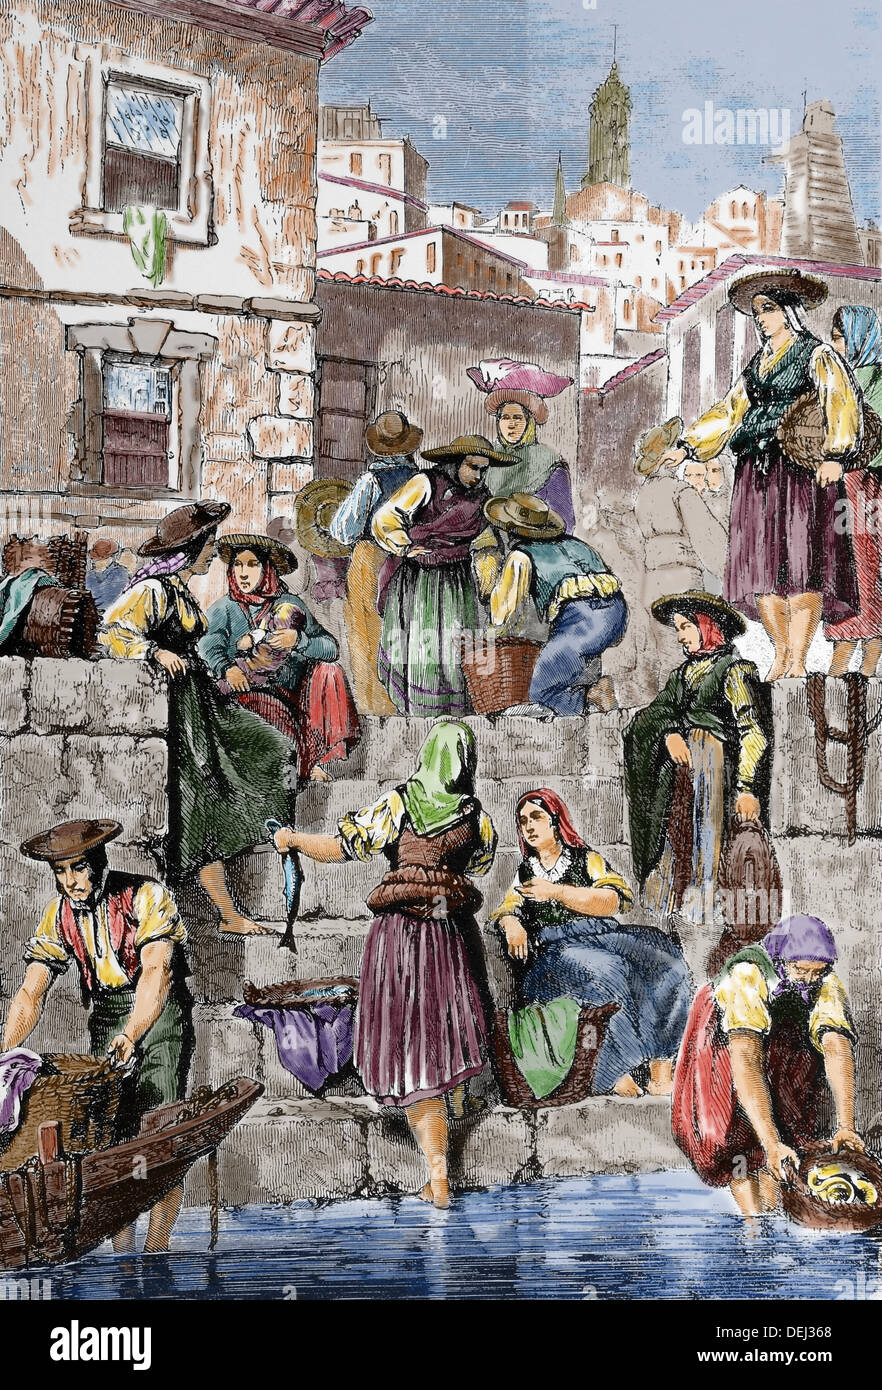 Europe. Portugal. Fisherwomen of Oporto, c.1860. Engraving. Colored. Stock Photo